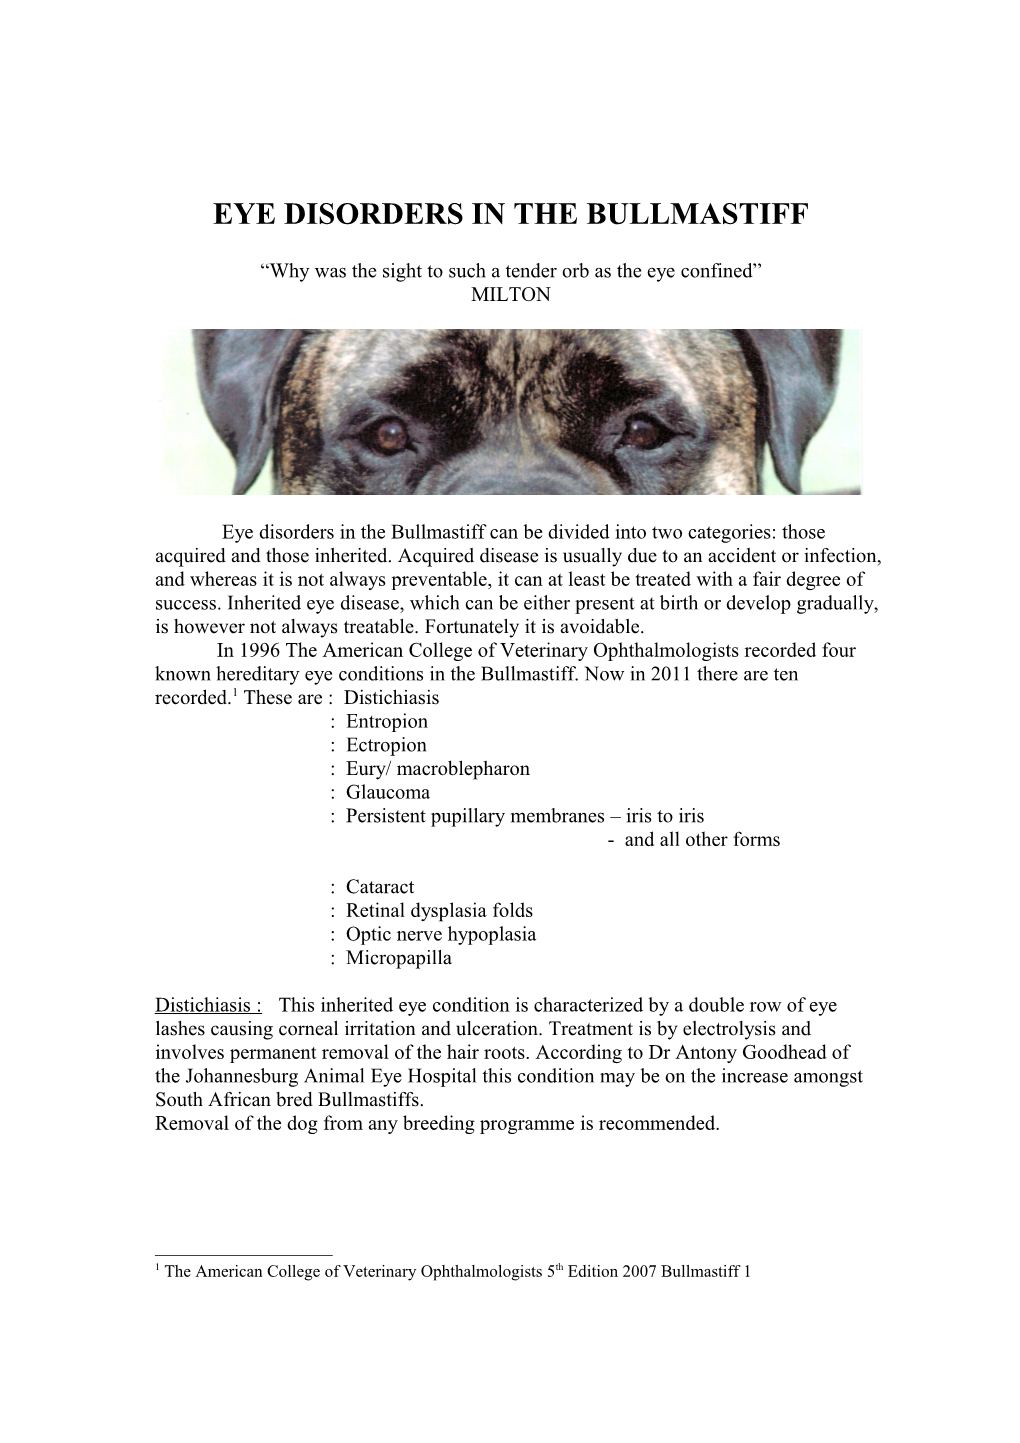 Eye Disorders in the Bullmastiff